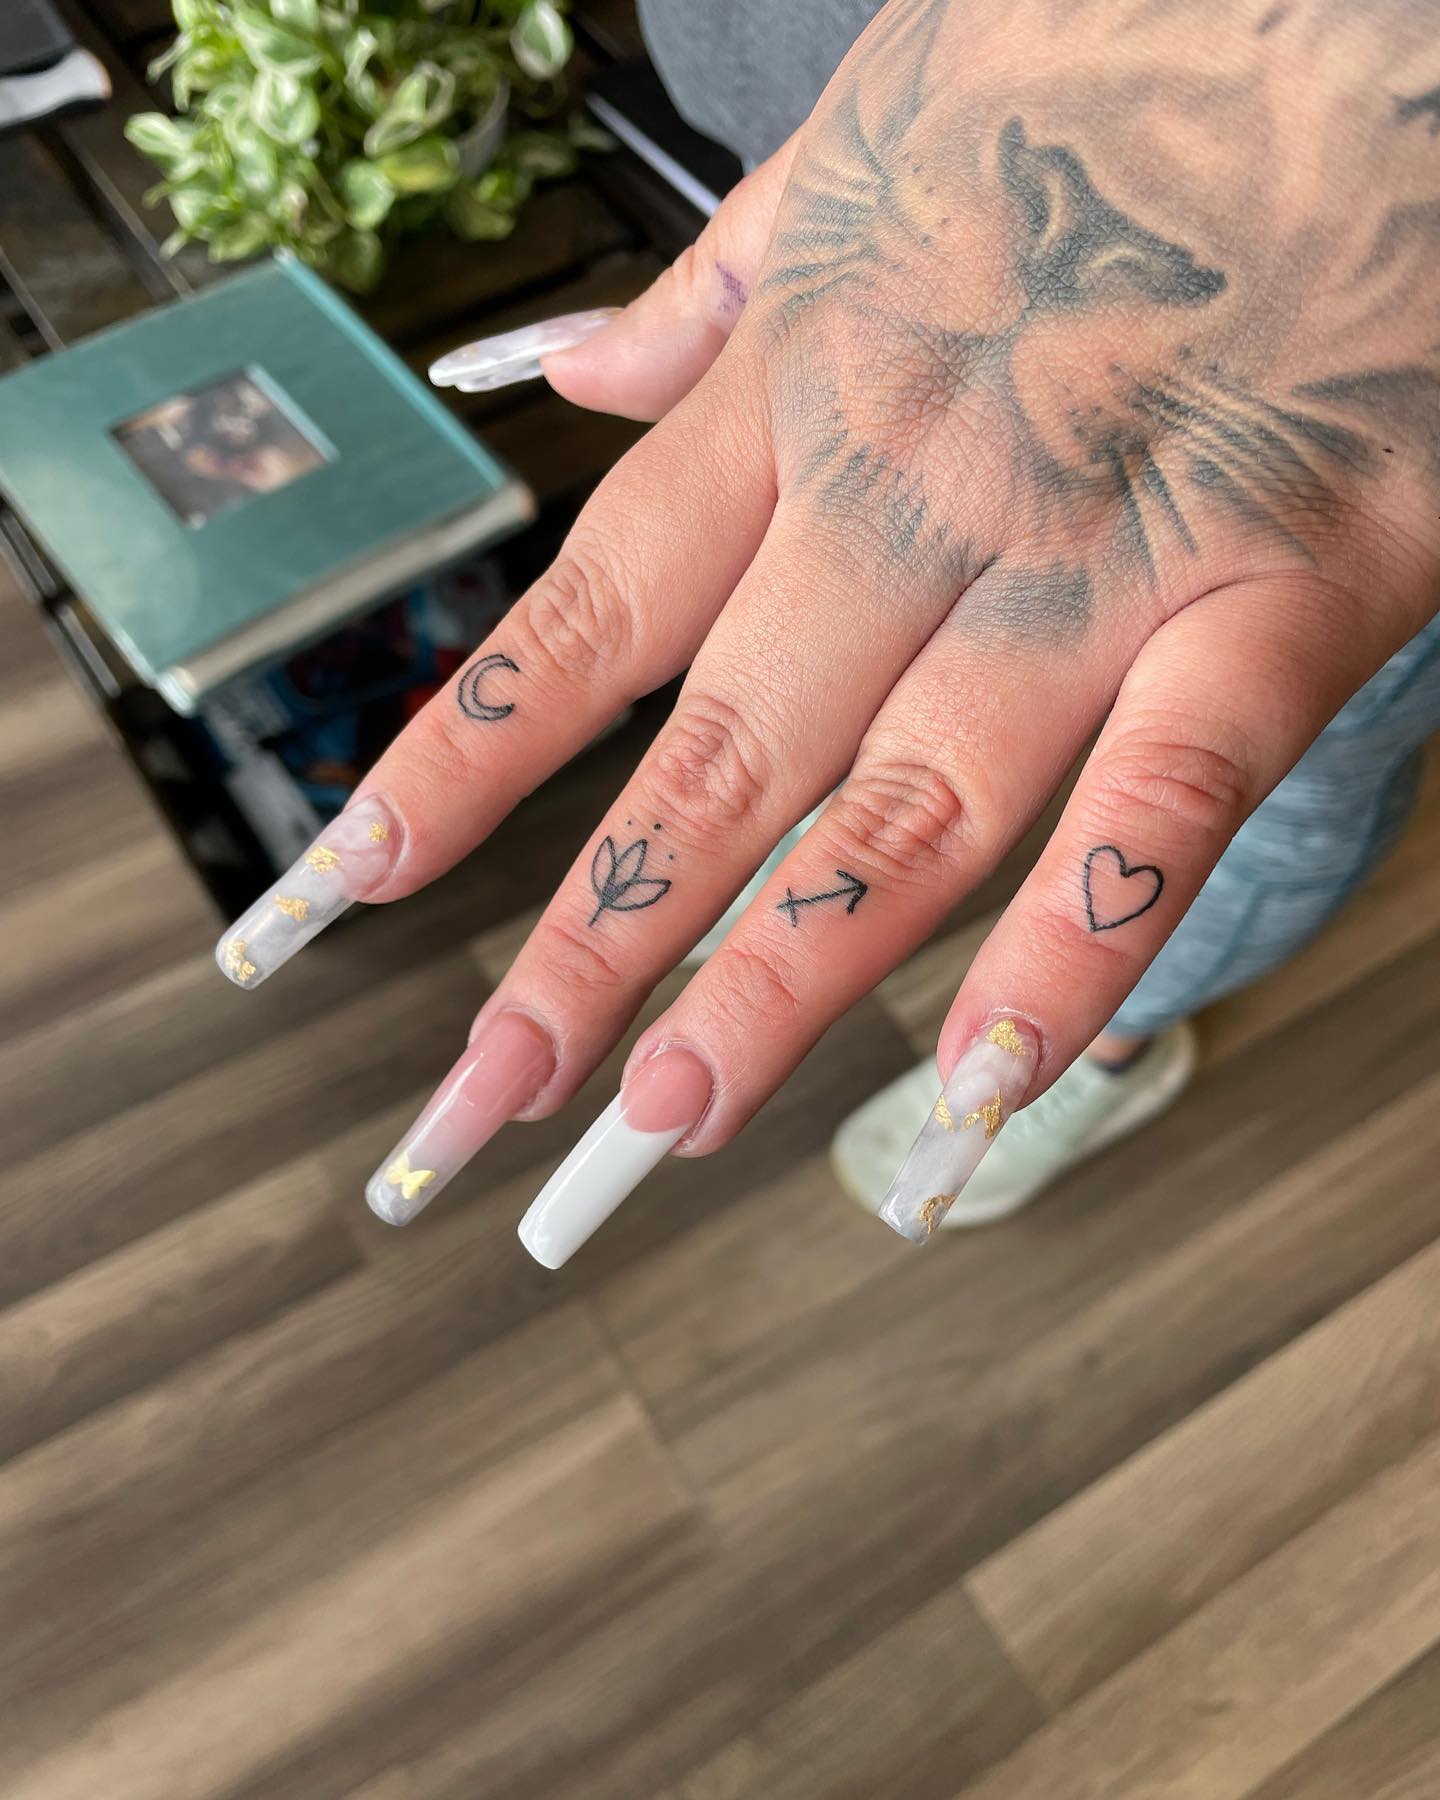 45+ Finger Tattoo Designs in 2021 - Men & Women